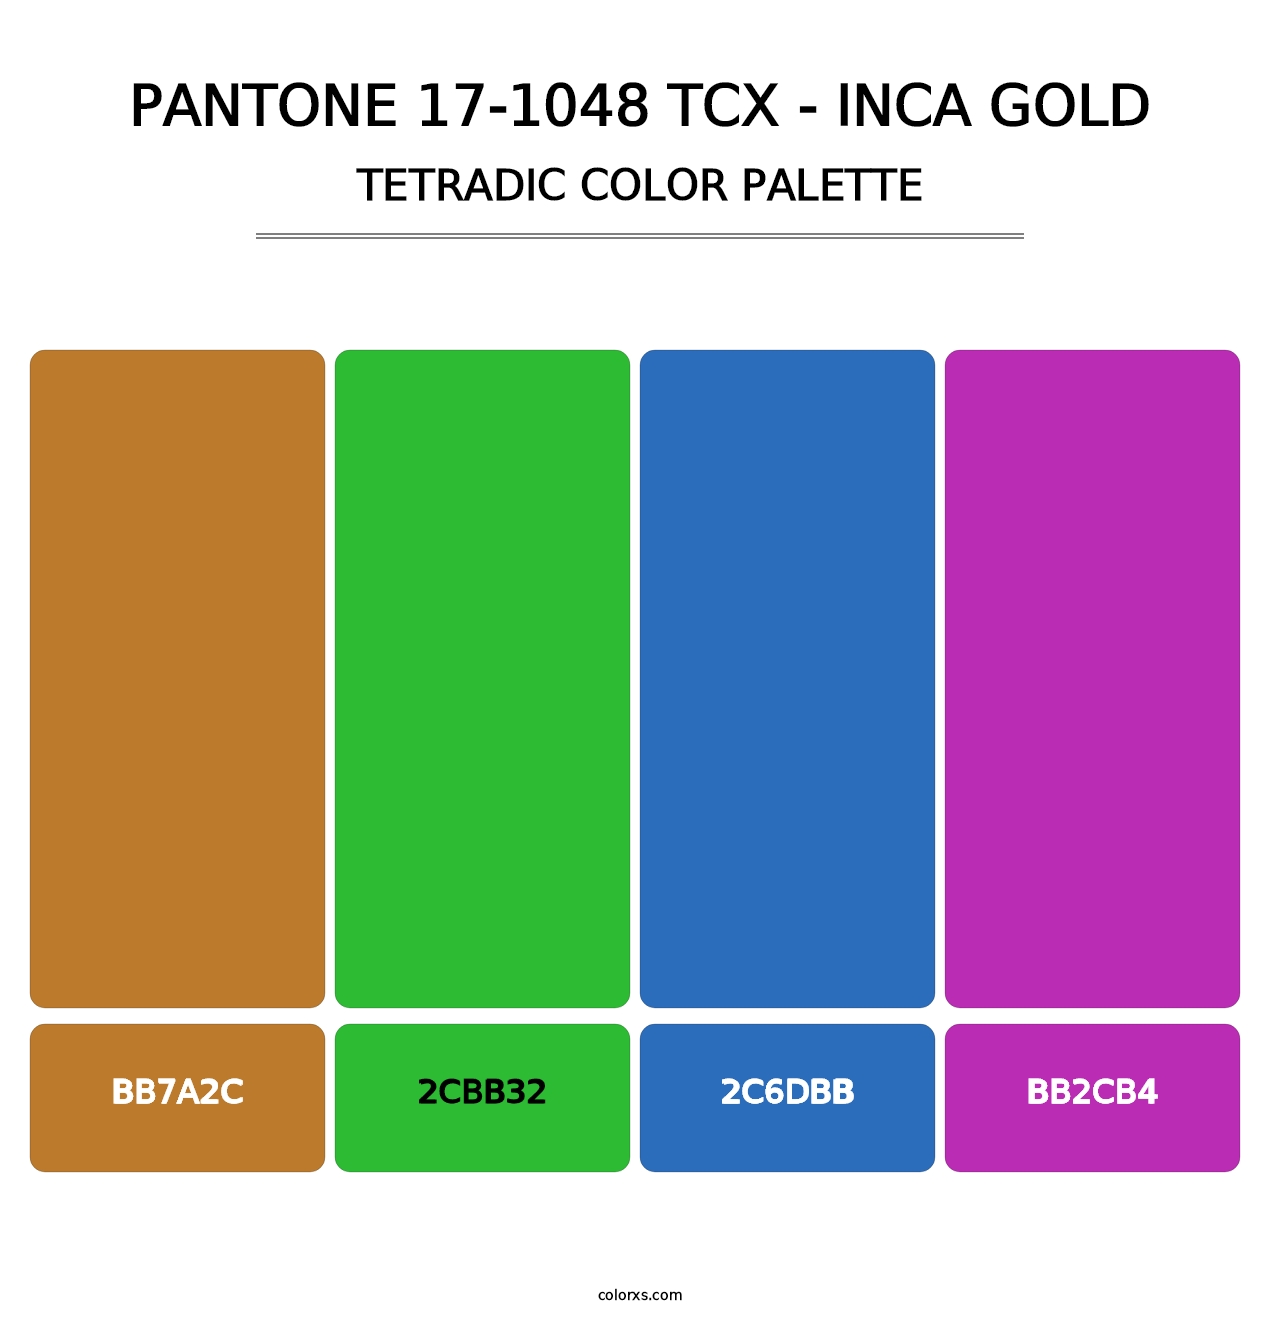 PANTONE 17-1048 TCX - Inca Gold - Tetradic Color Palette